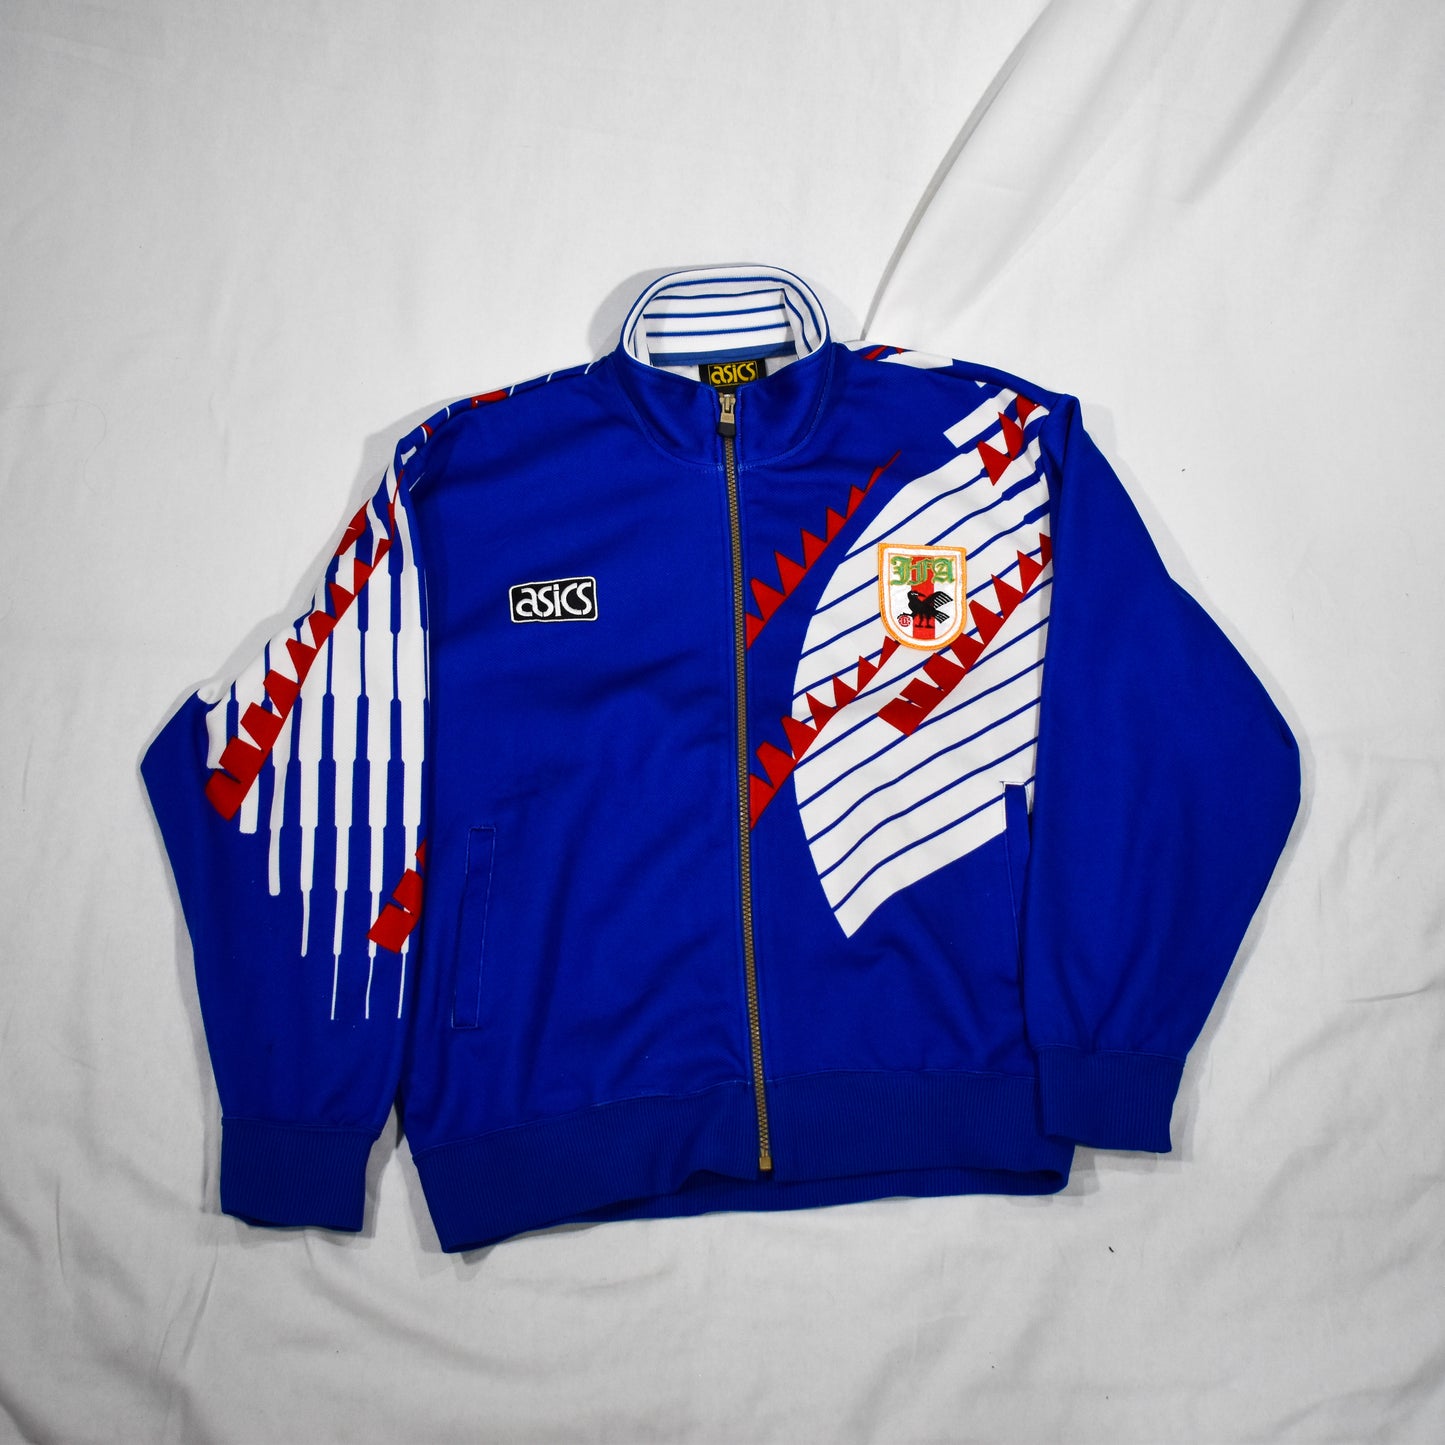 1994-1996 Japan - Asics Track Jacket